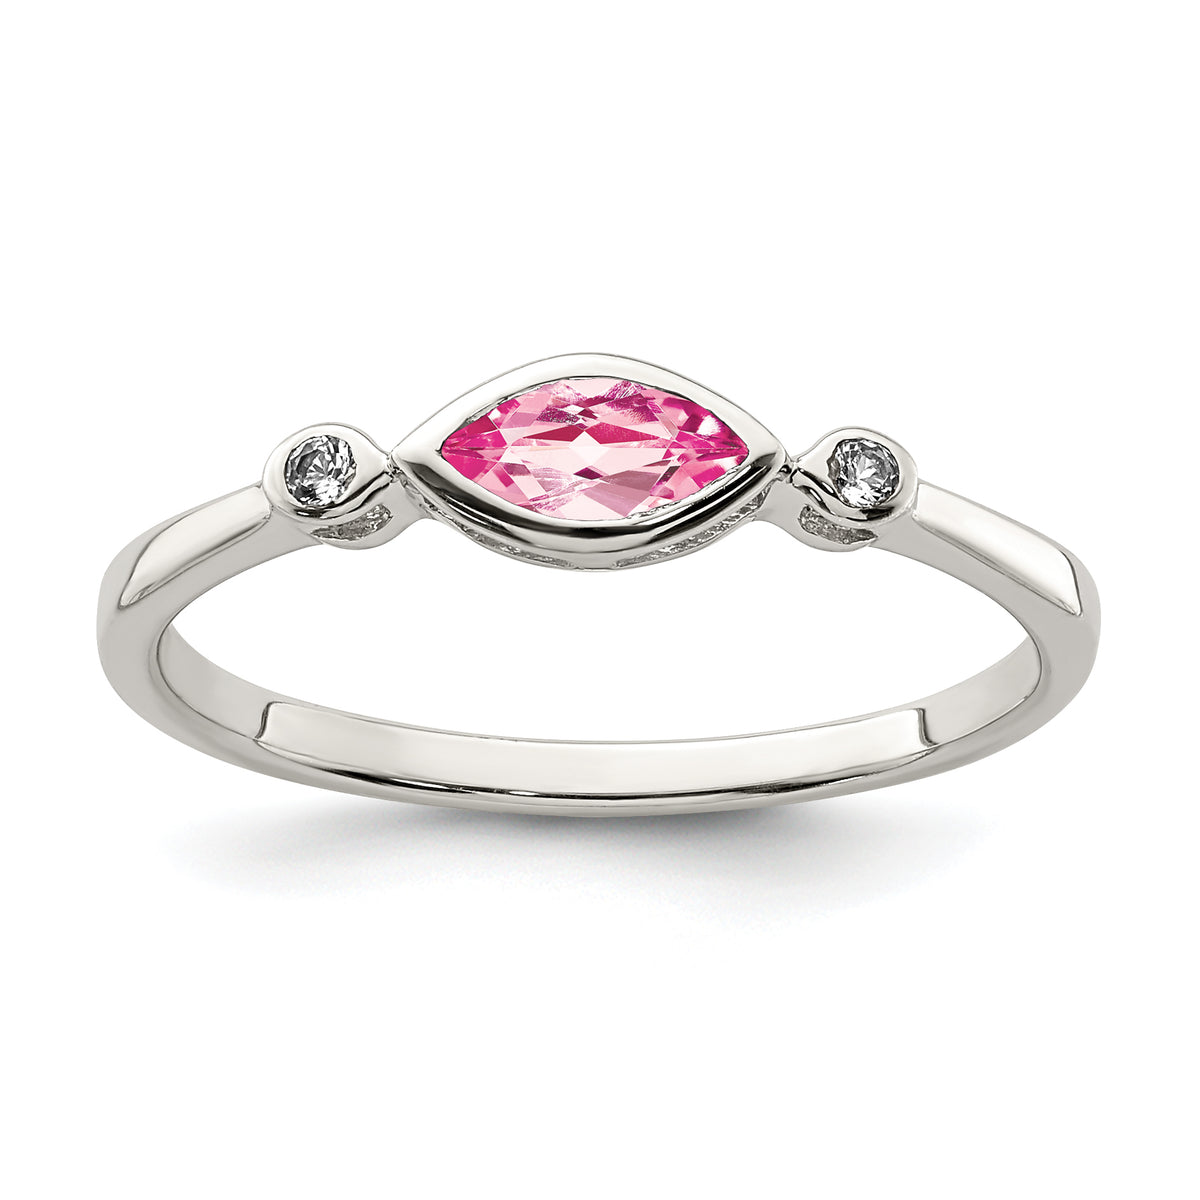 Sterling Silver Rhod-pltd Polished Pink Tourmaline/ White Topaz Ring